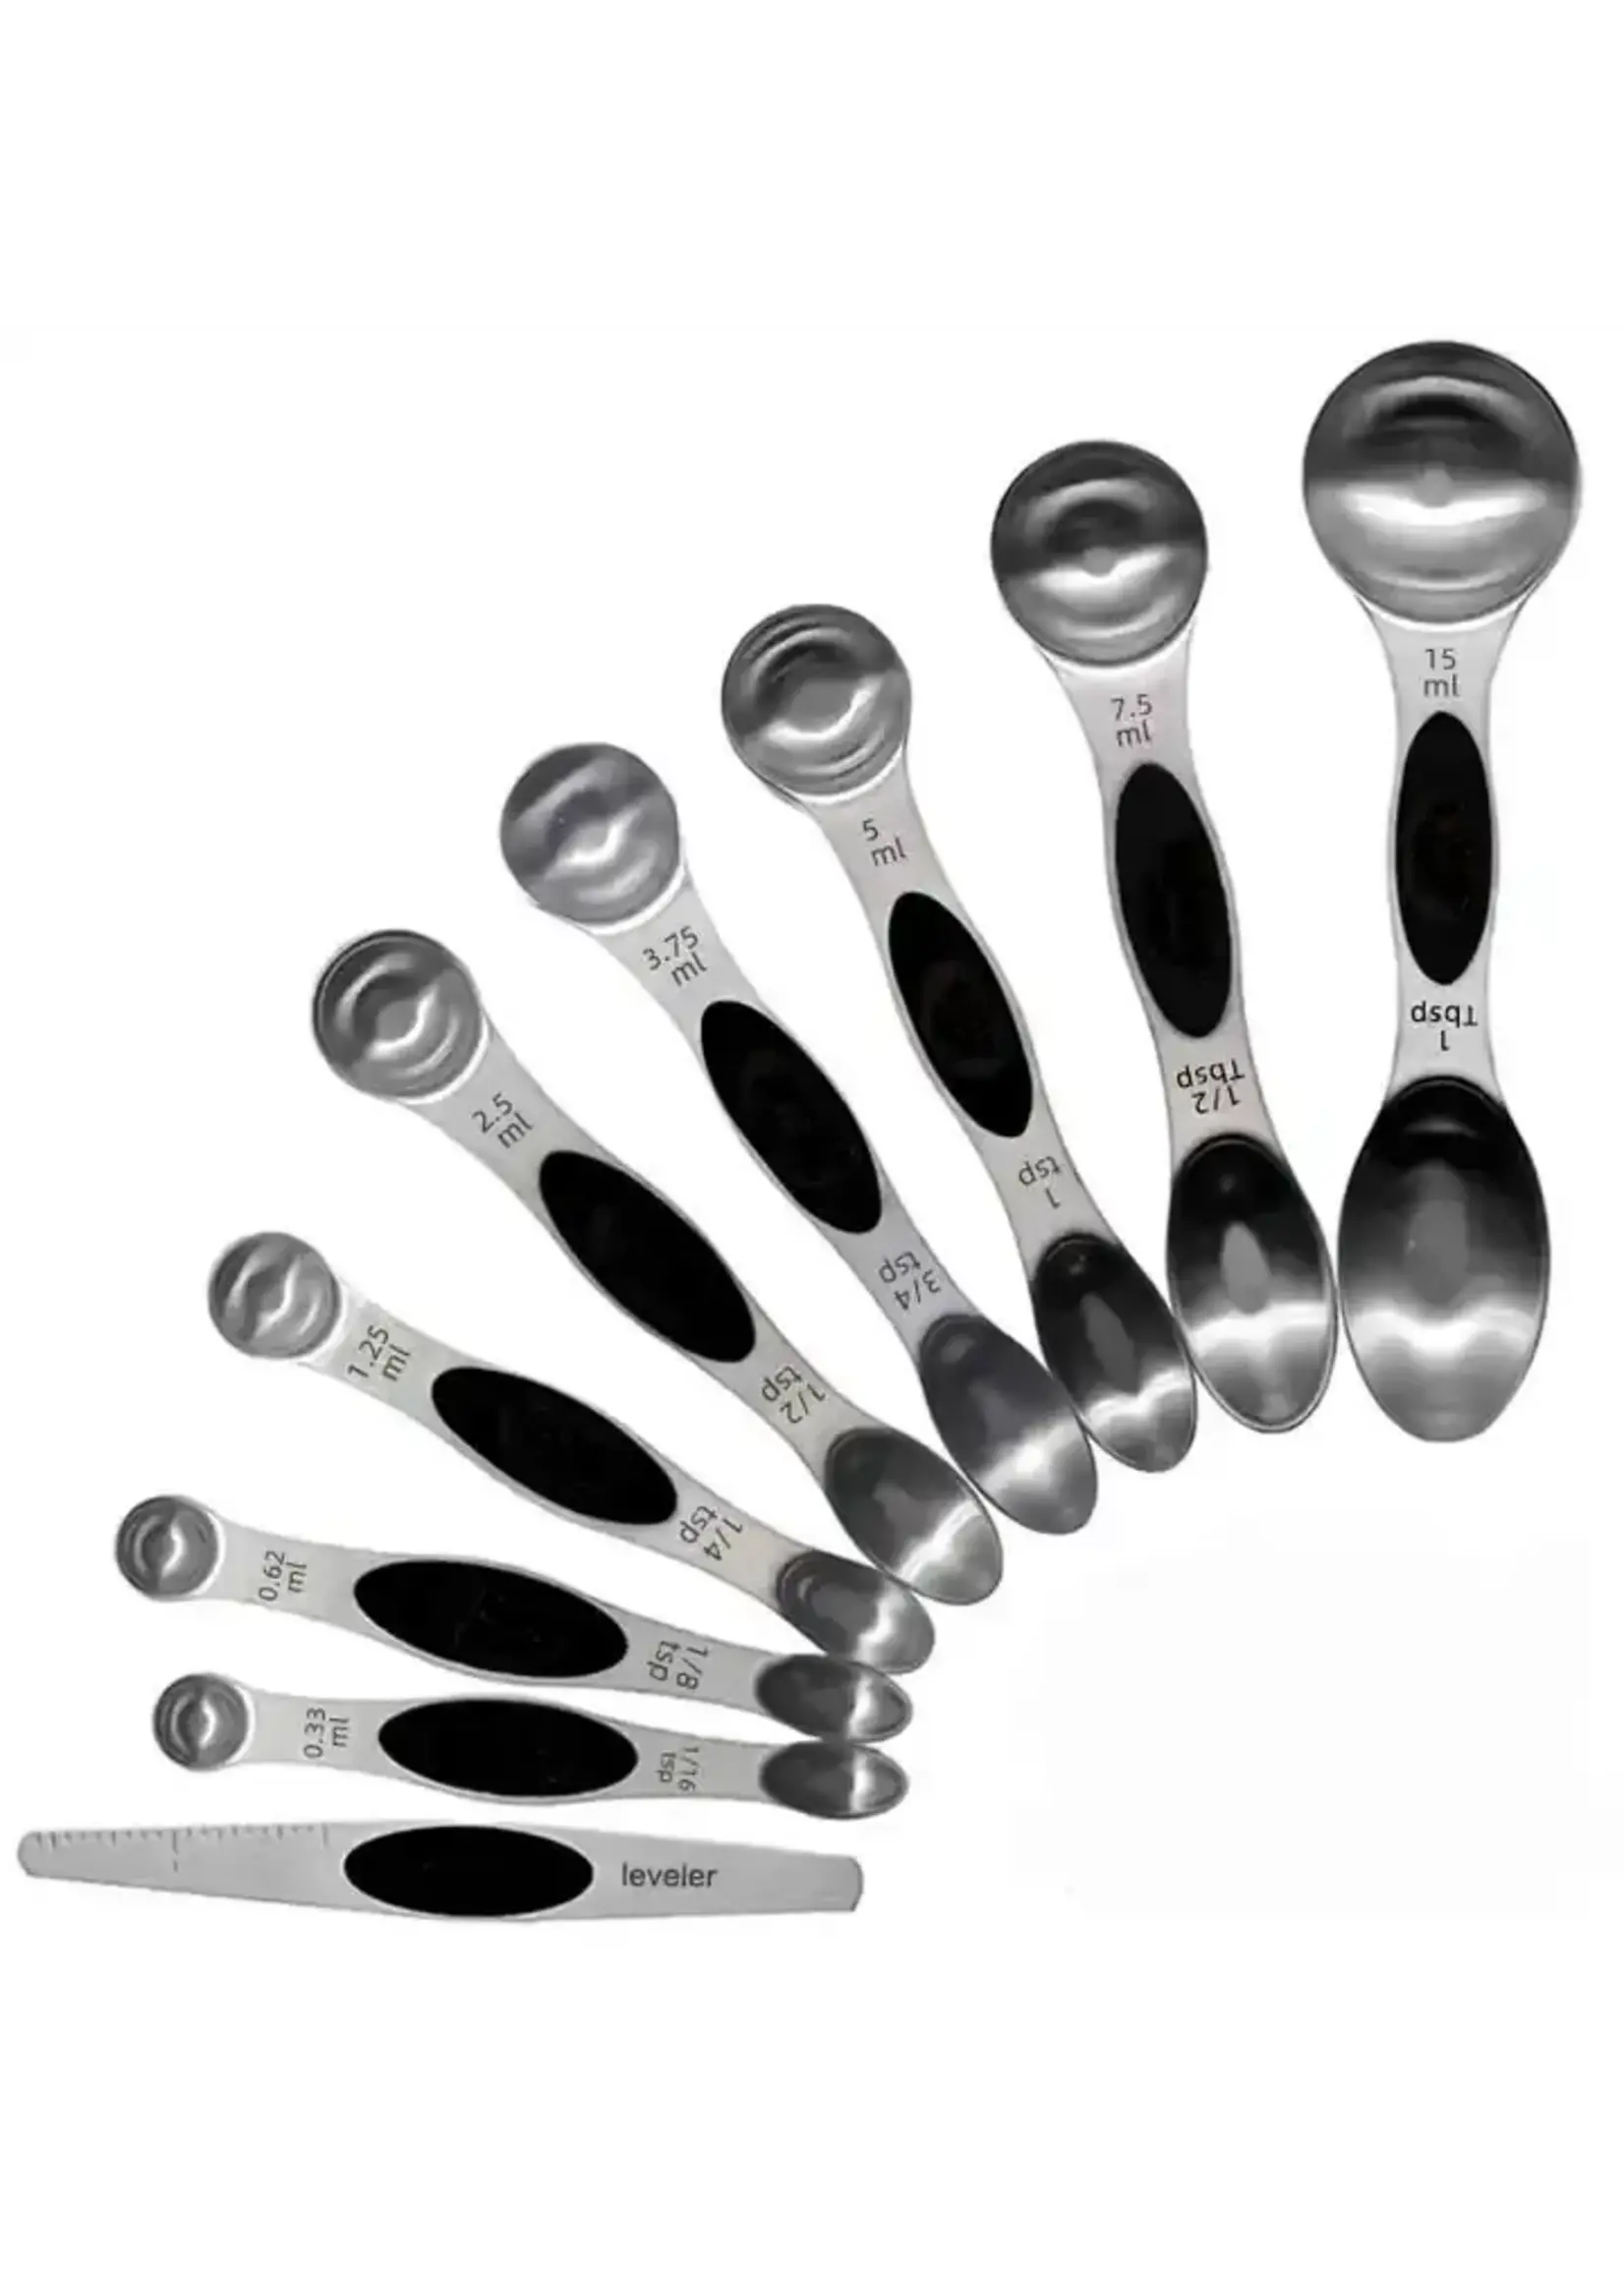 Magnetic Measuring Spoon Set